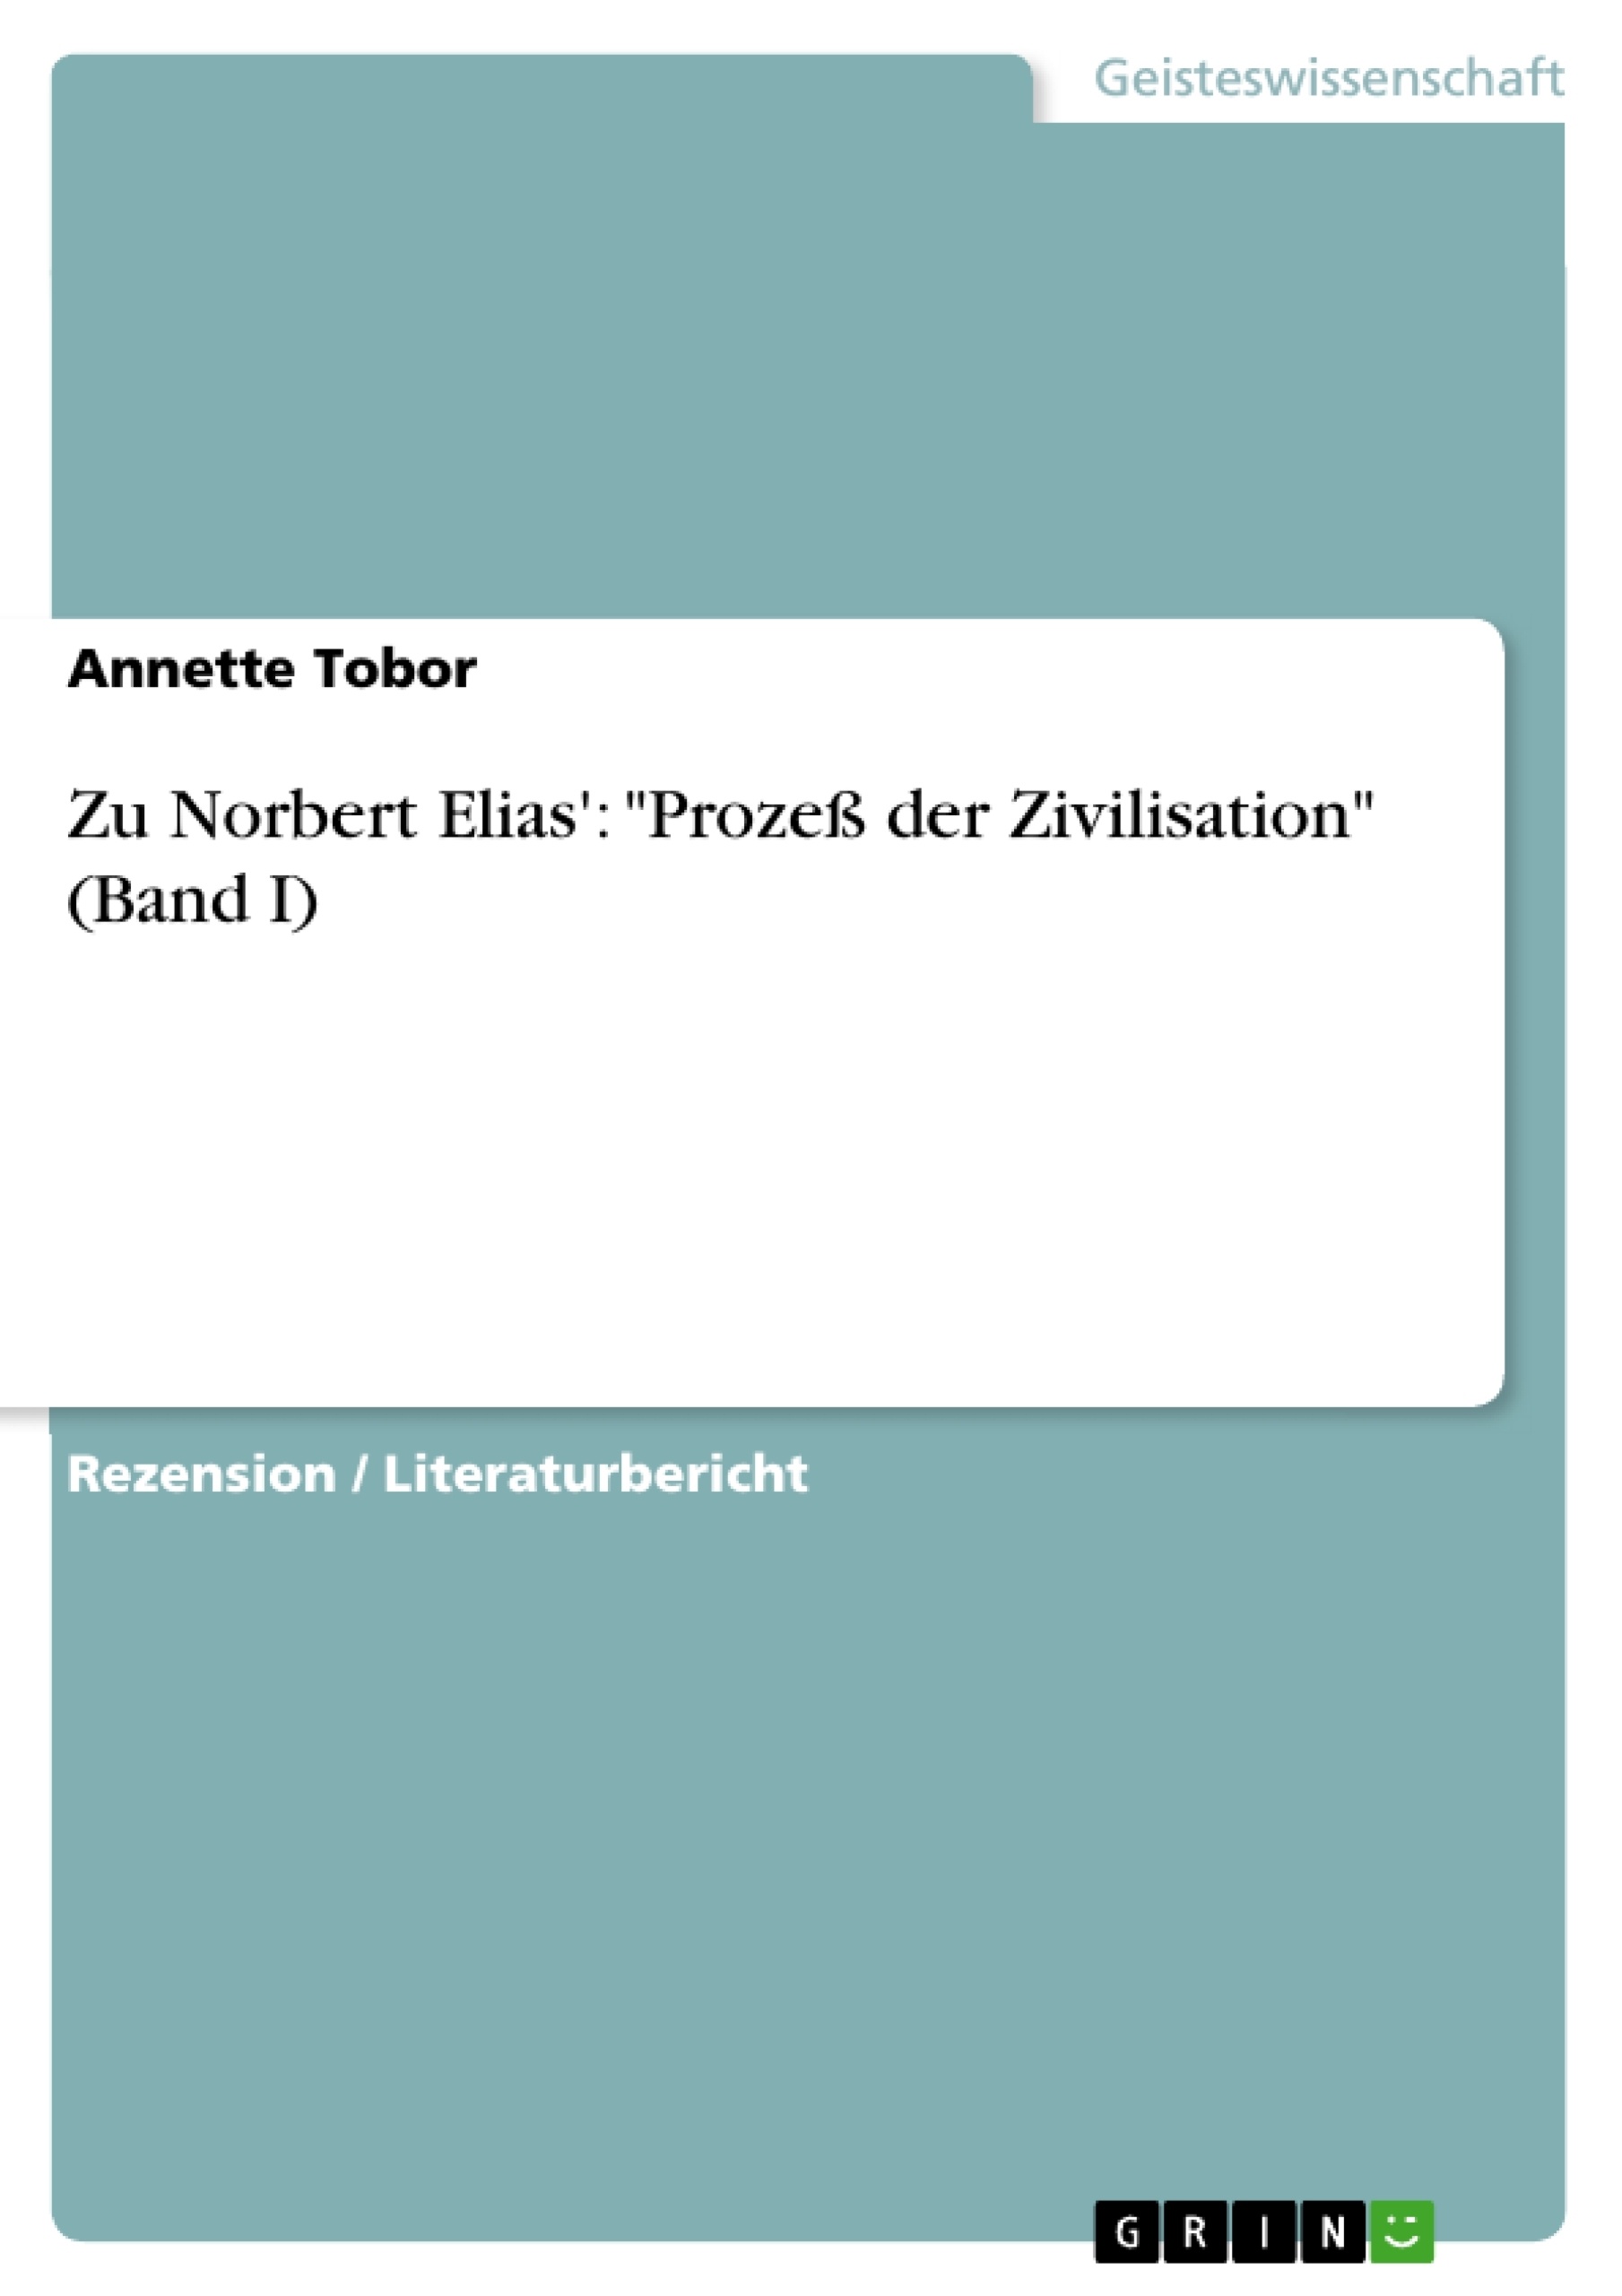 Título: Zu Norbert Elias': "Prozeß der Zivilisation" (Band I)